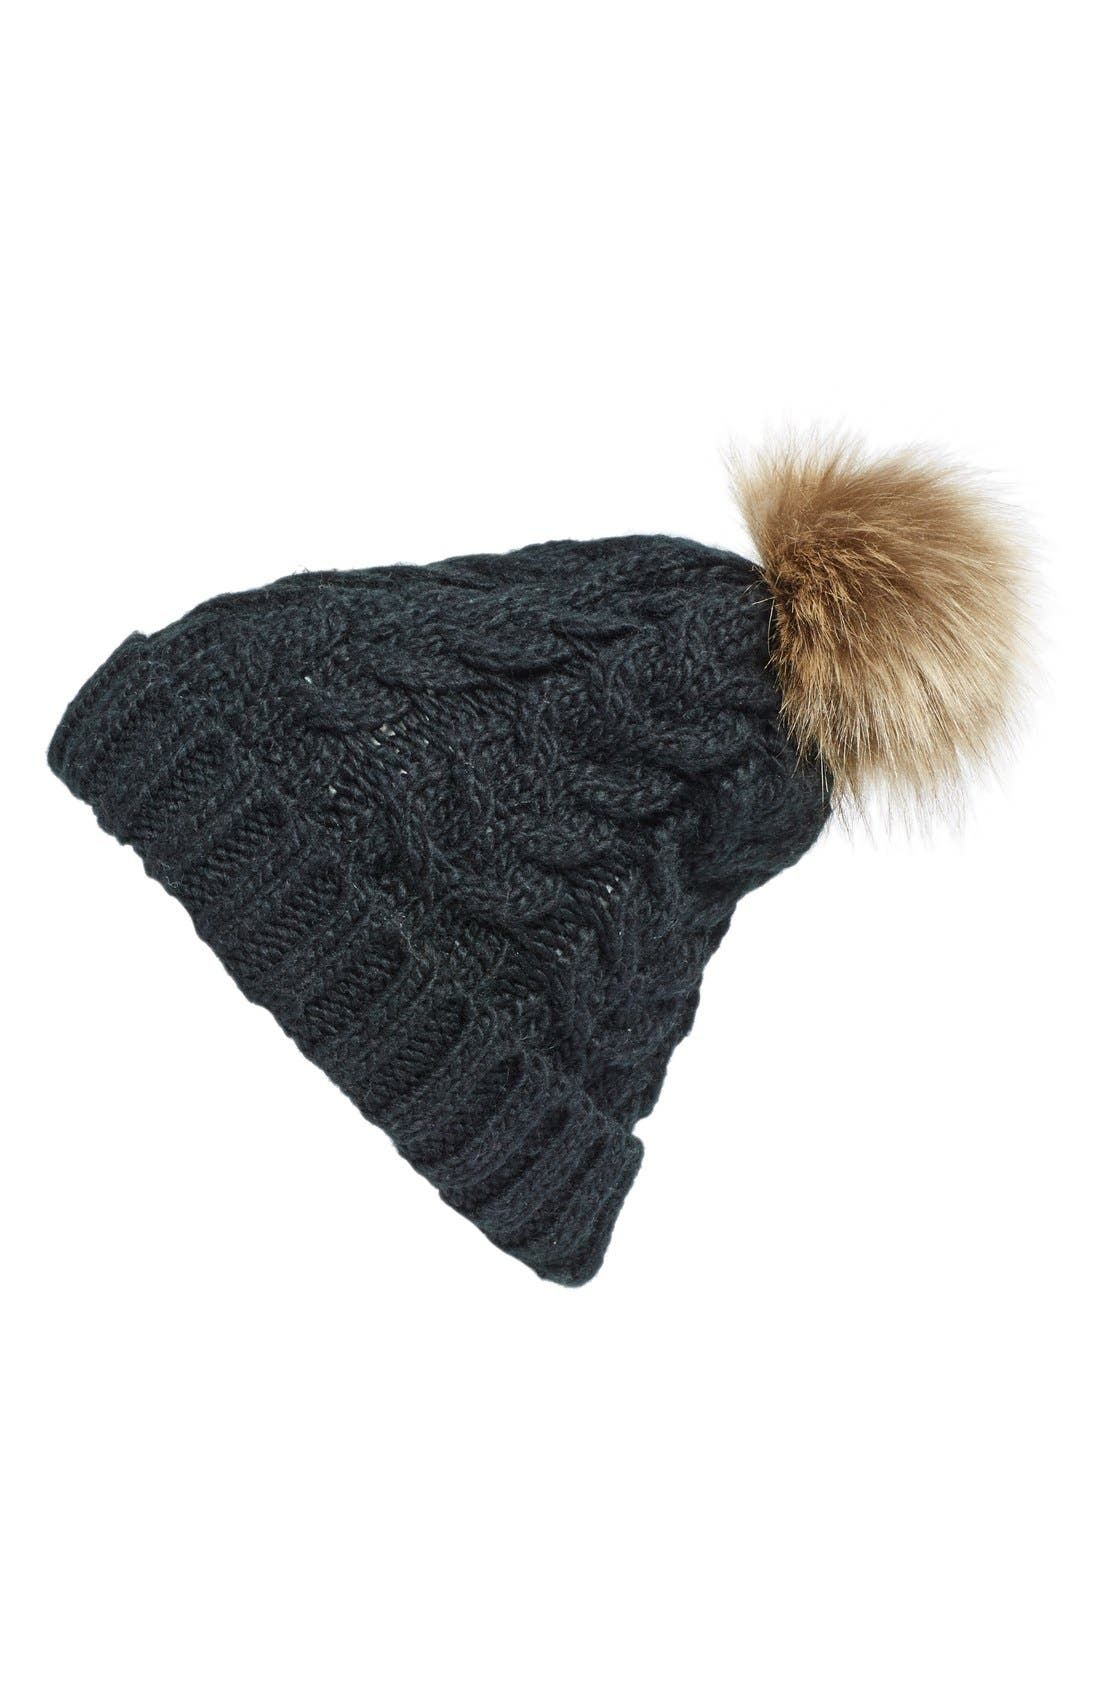 Knit Beanie with Faux Fur Pompom | Nordstrom